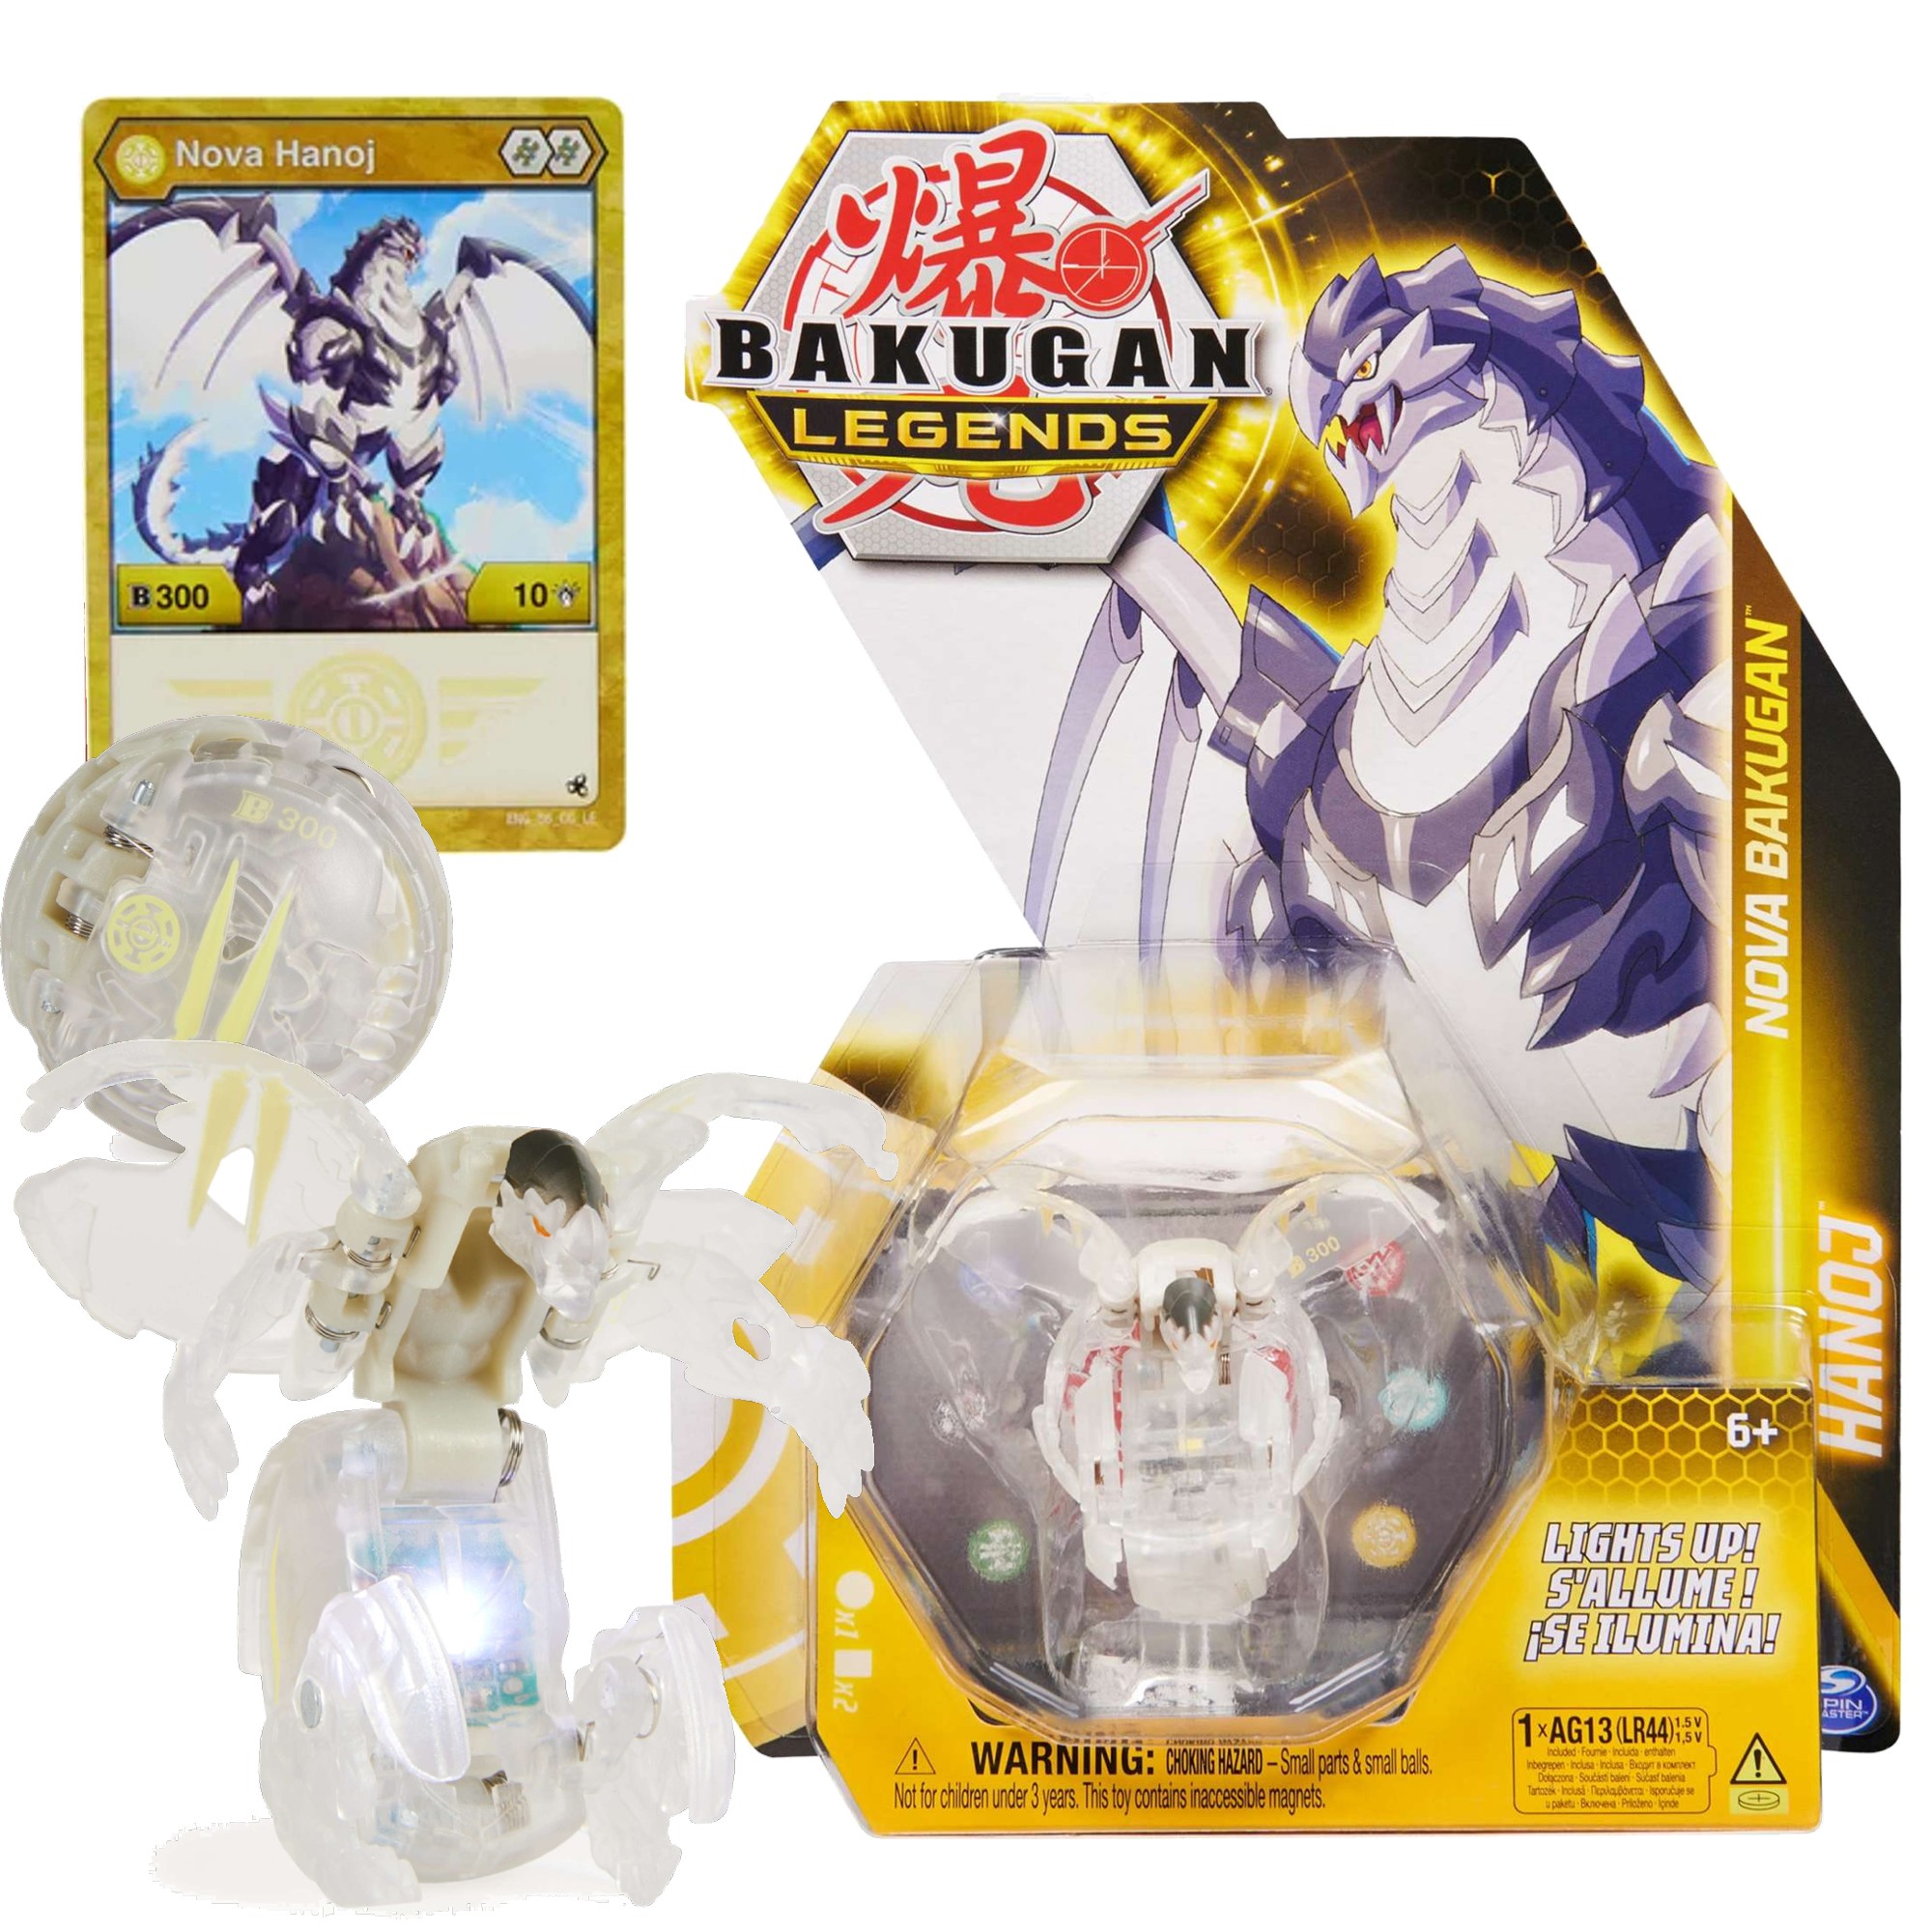 Bakugan Legends Nova Hanoj wiecca figurka i karty